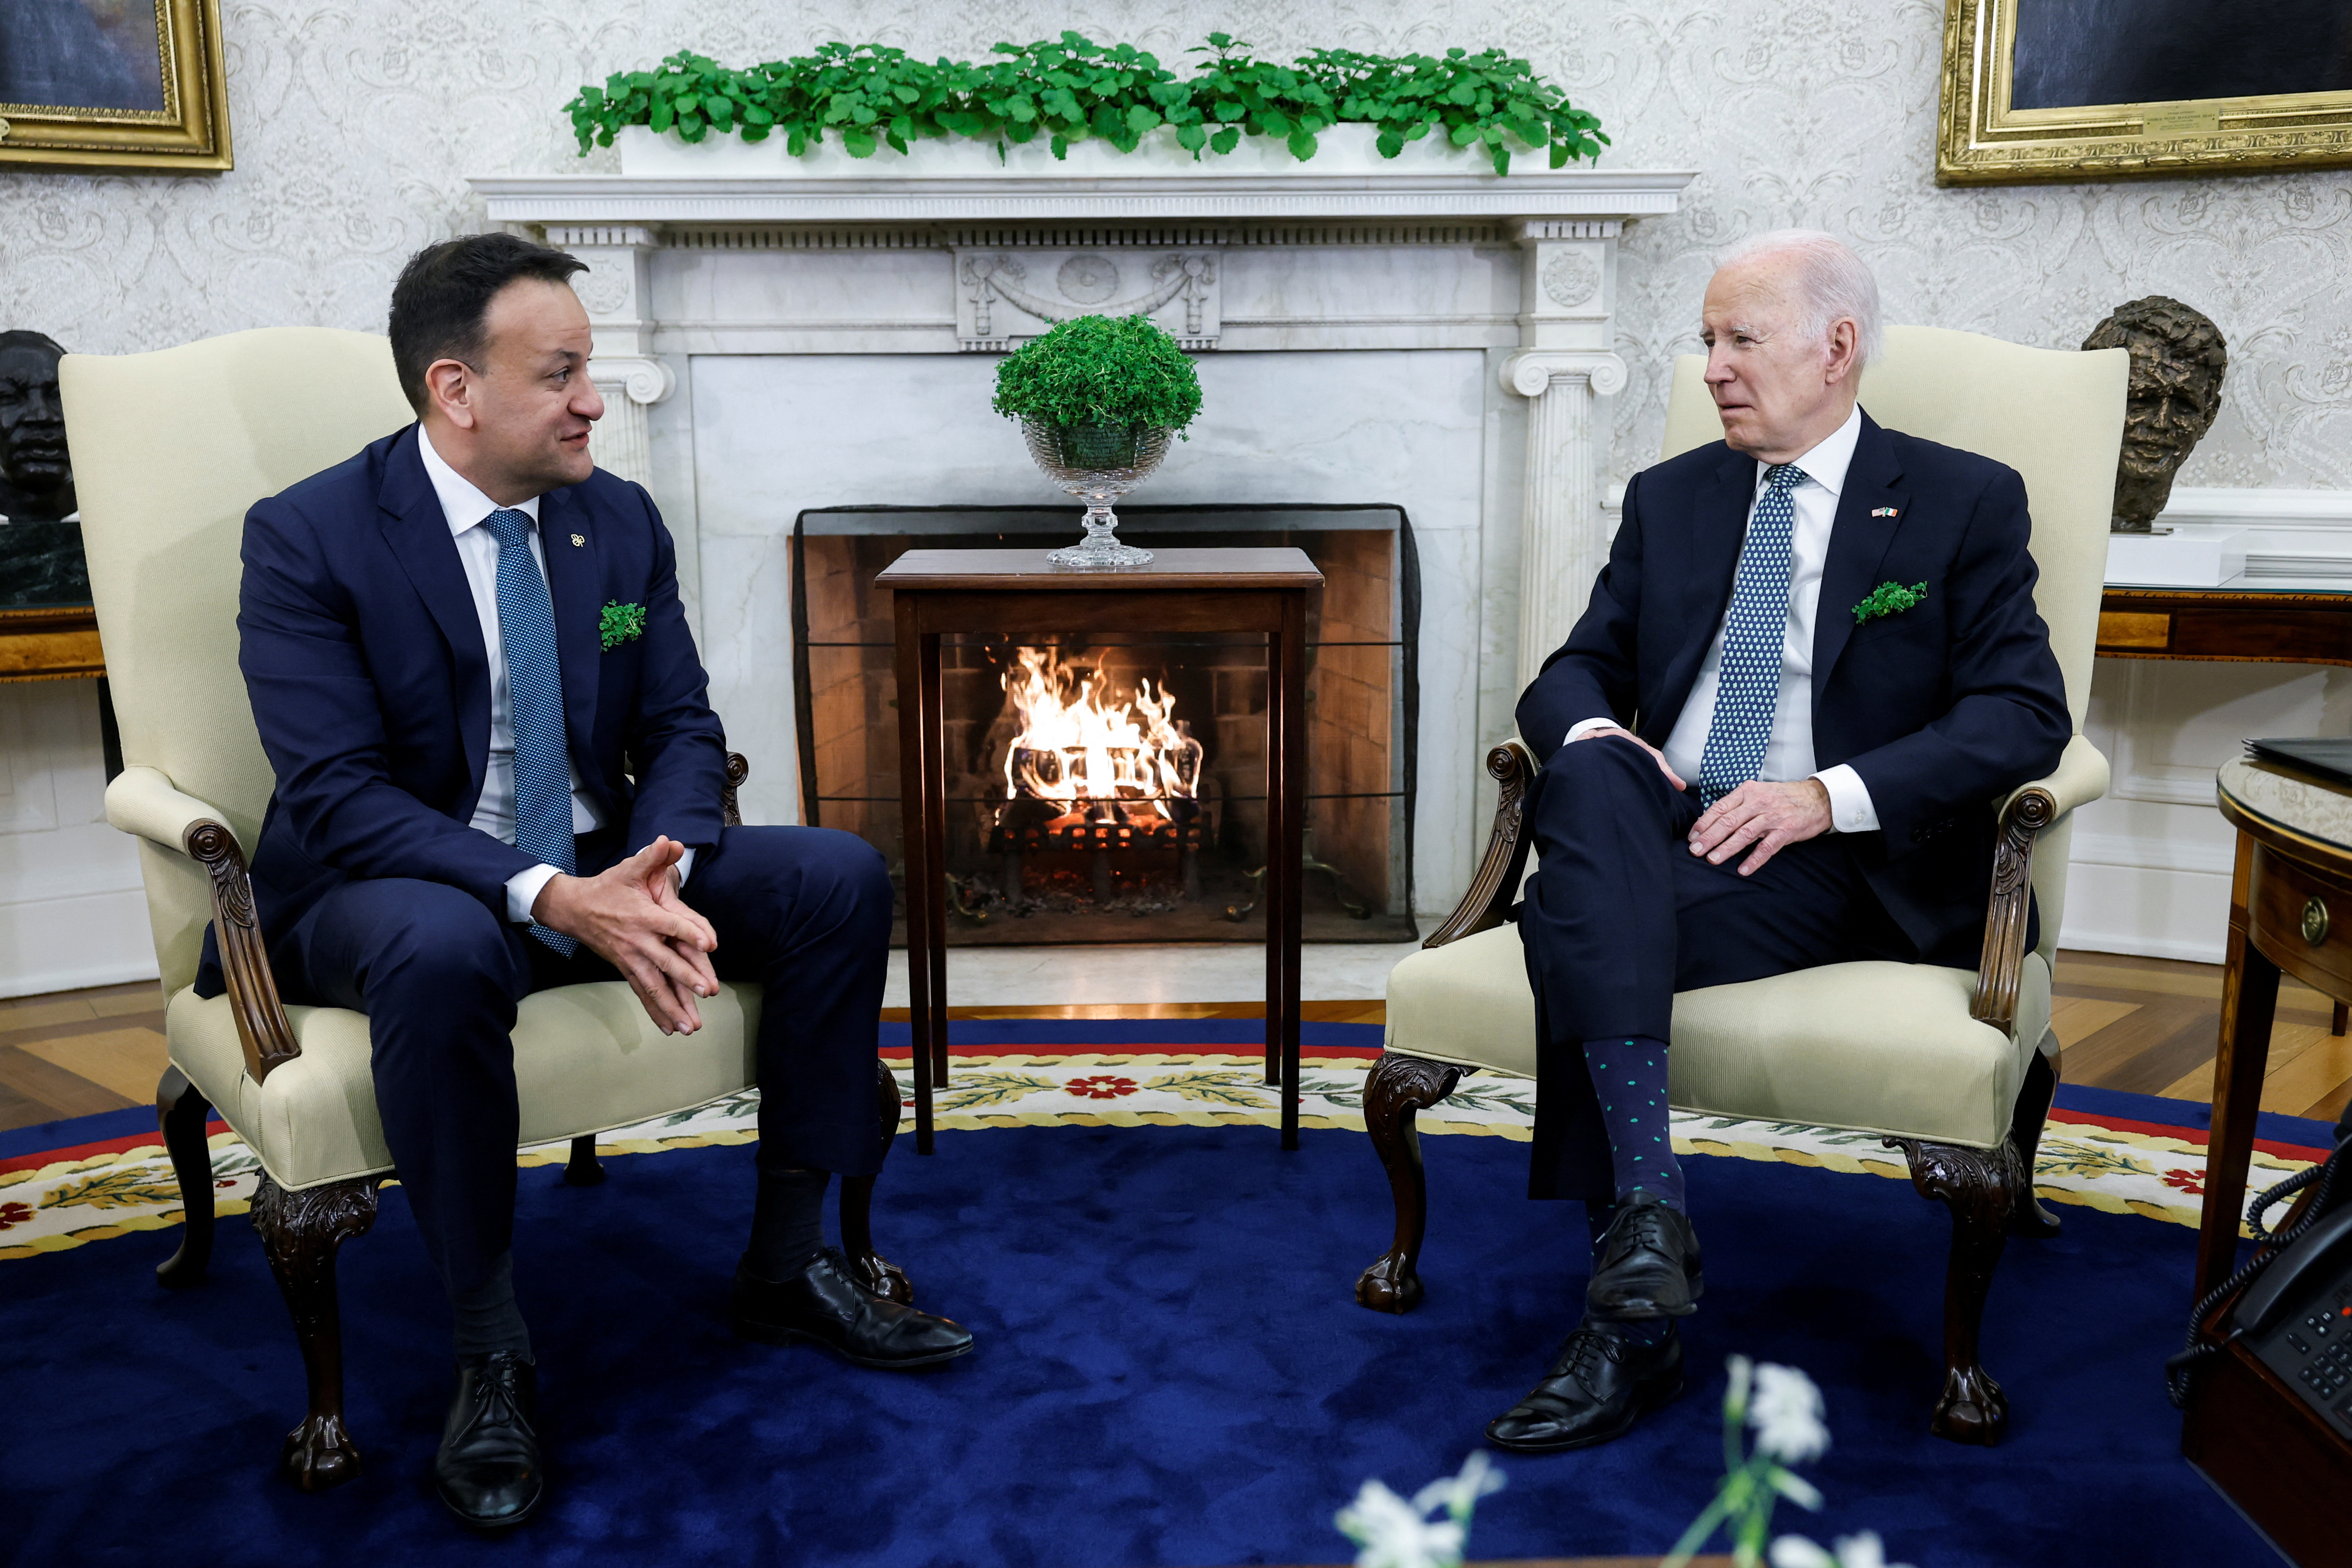 U.S. President Biden hosts Ireland's Prime Minister (Taoiseach) Varadkar at the White House in Washington